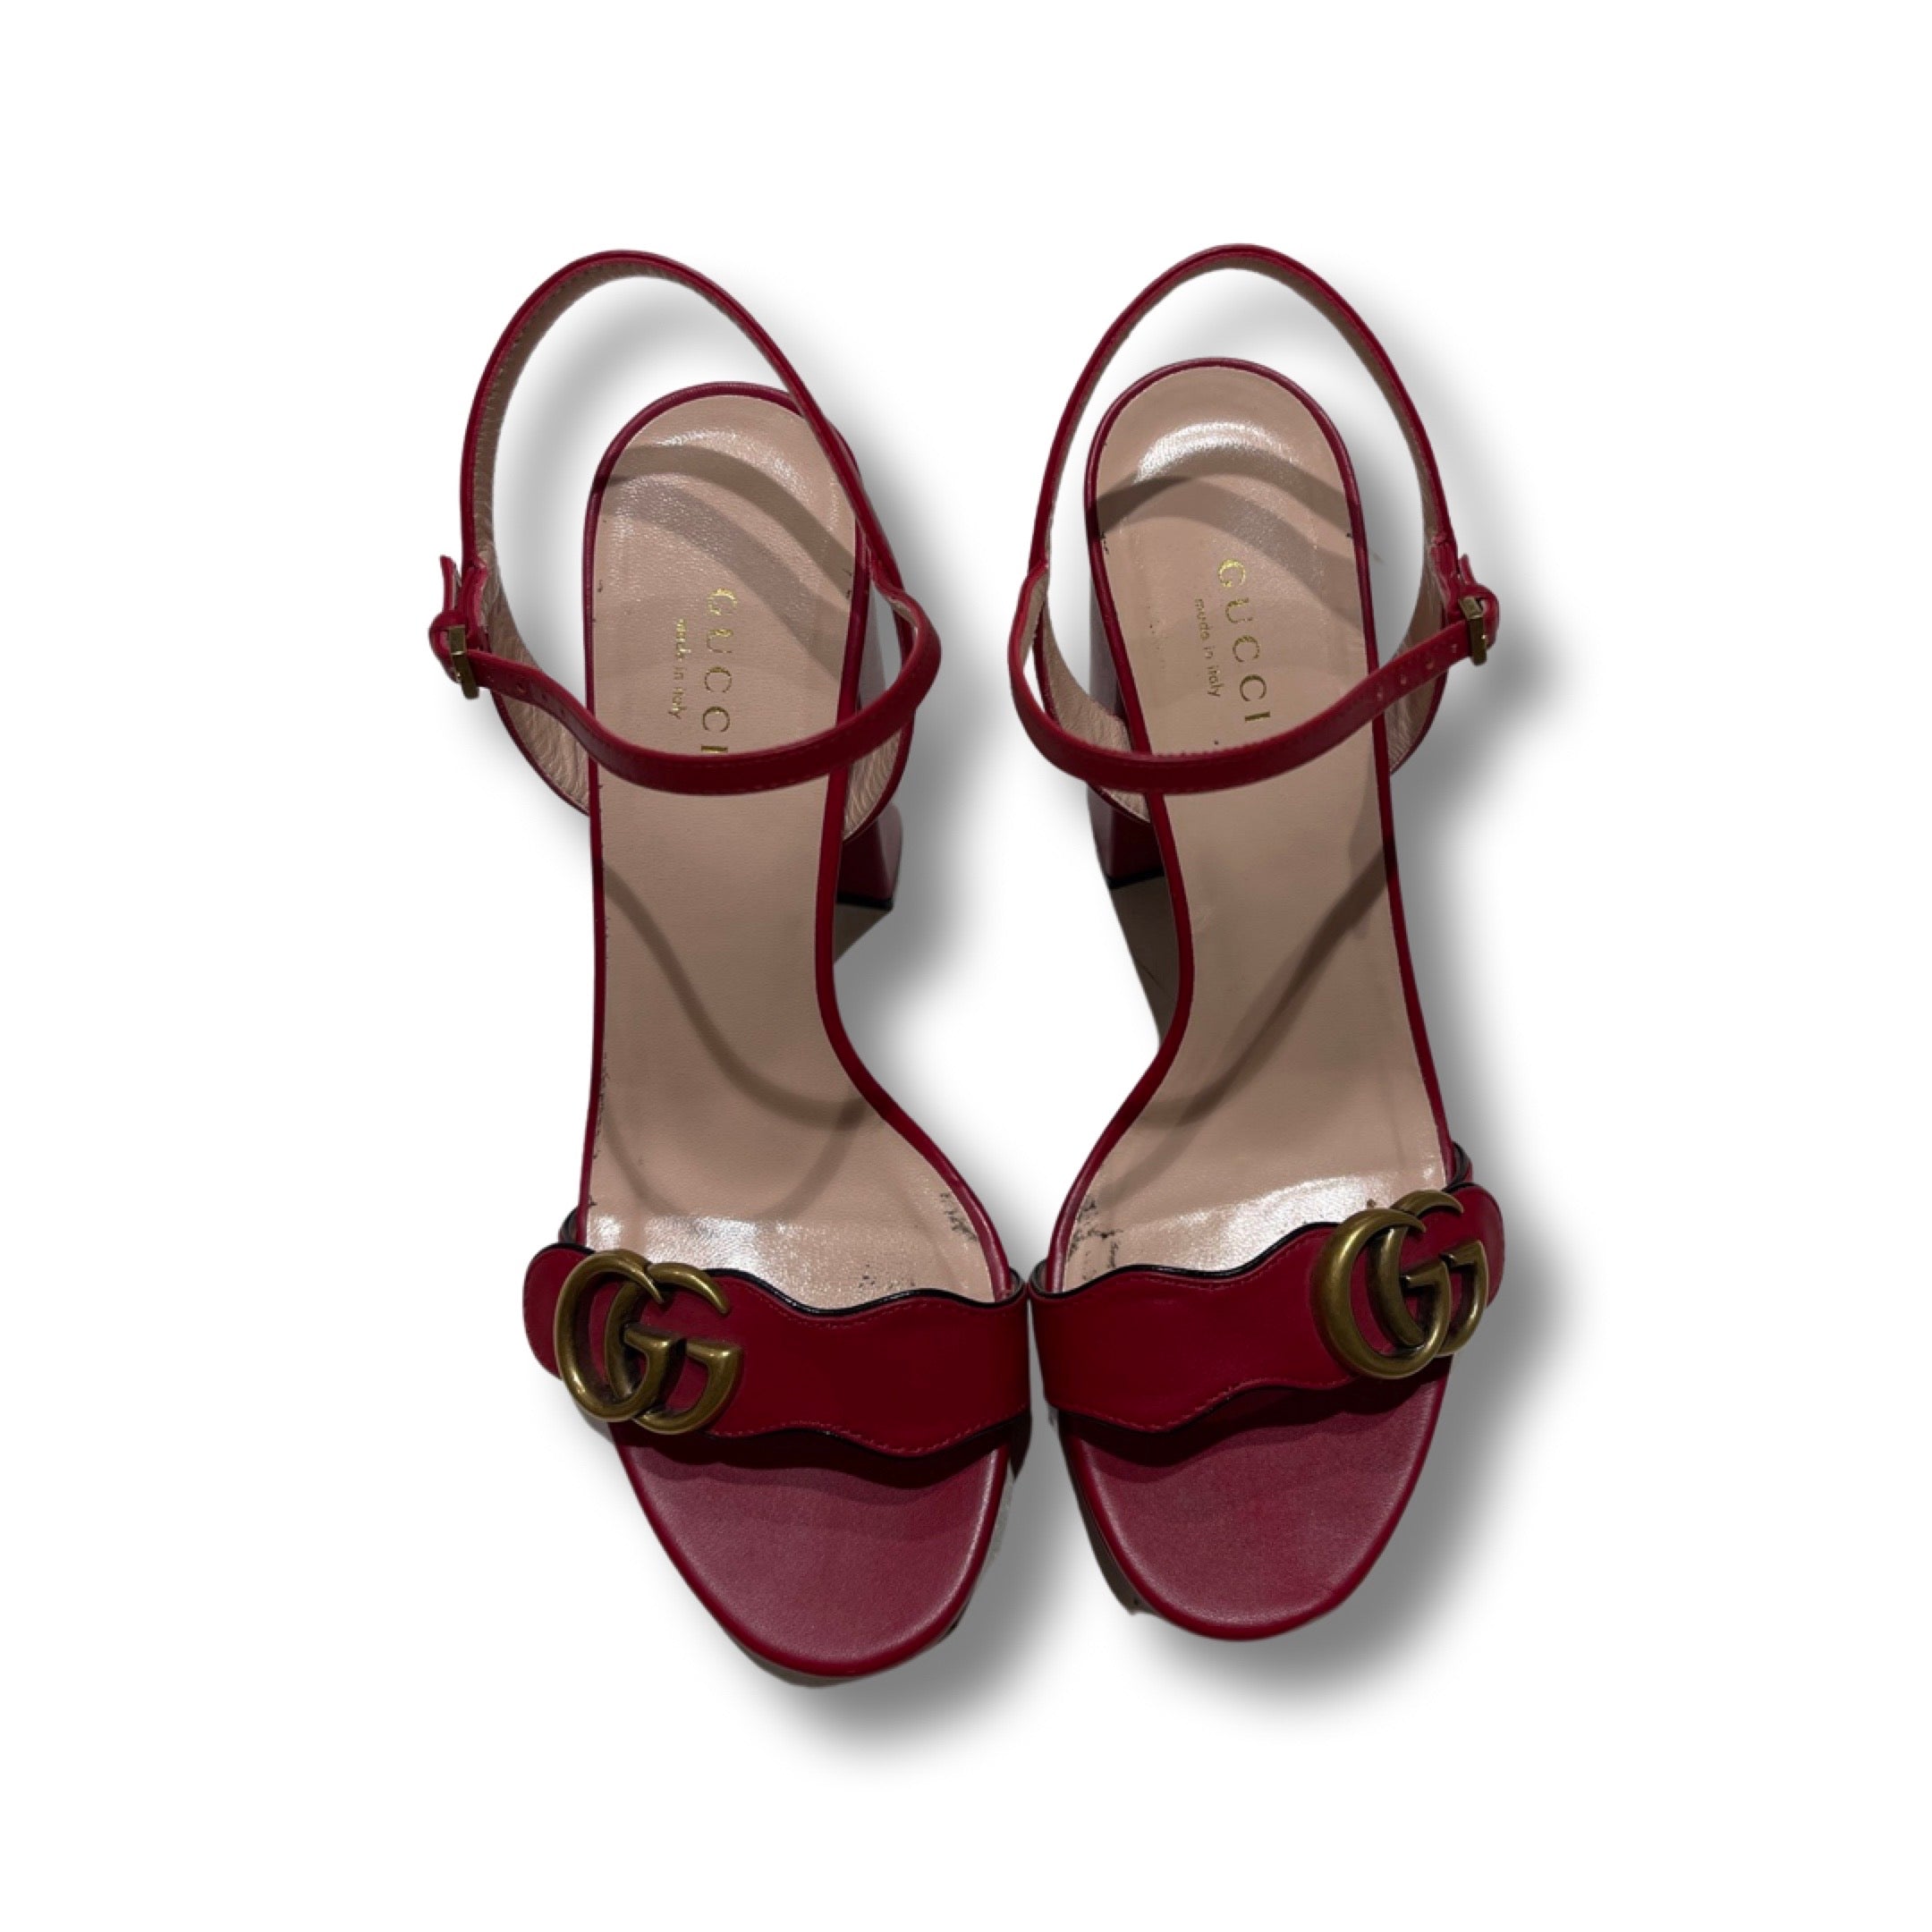 Gucci red marmont platform sandal.